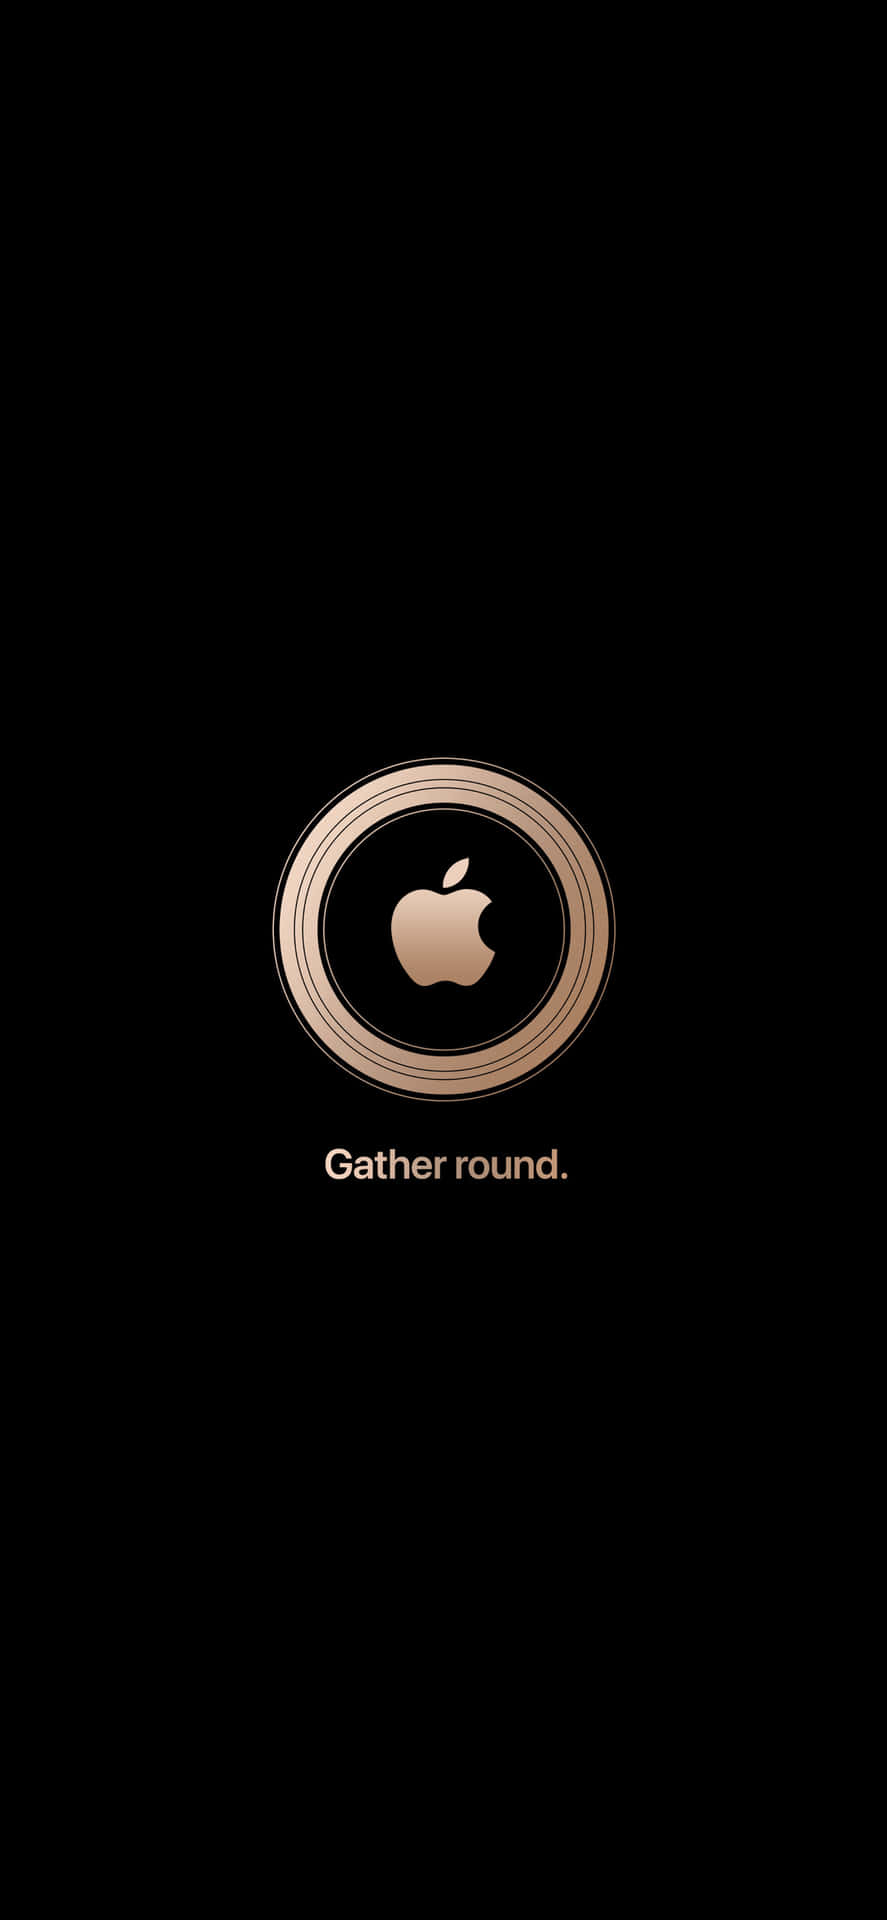 Apple Gather Round Event Invitation Wallpaper